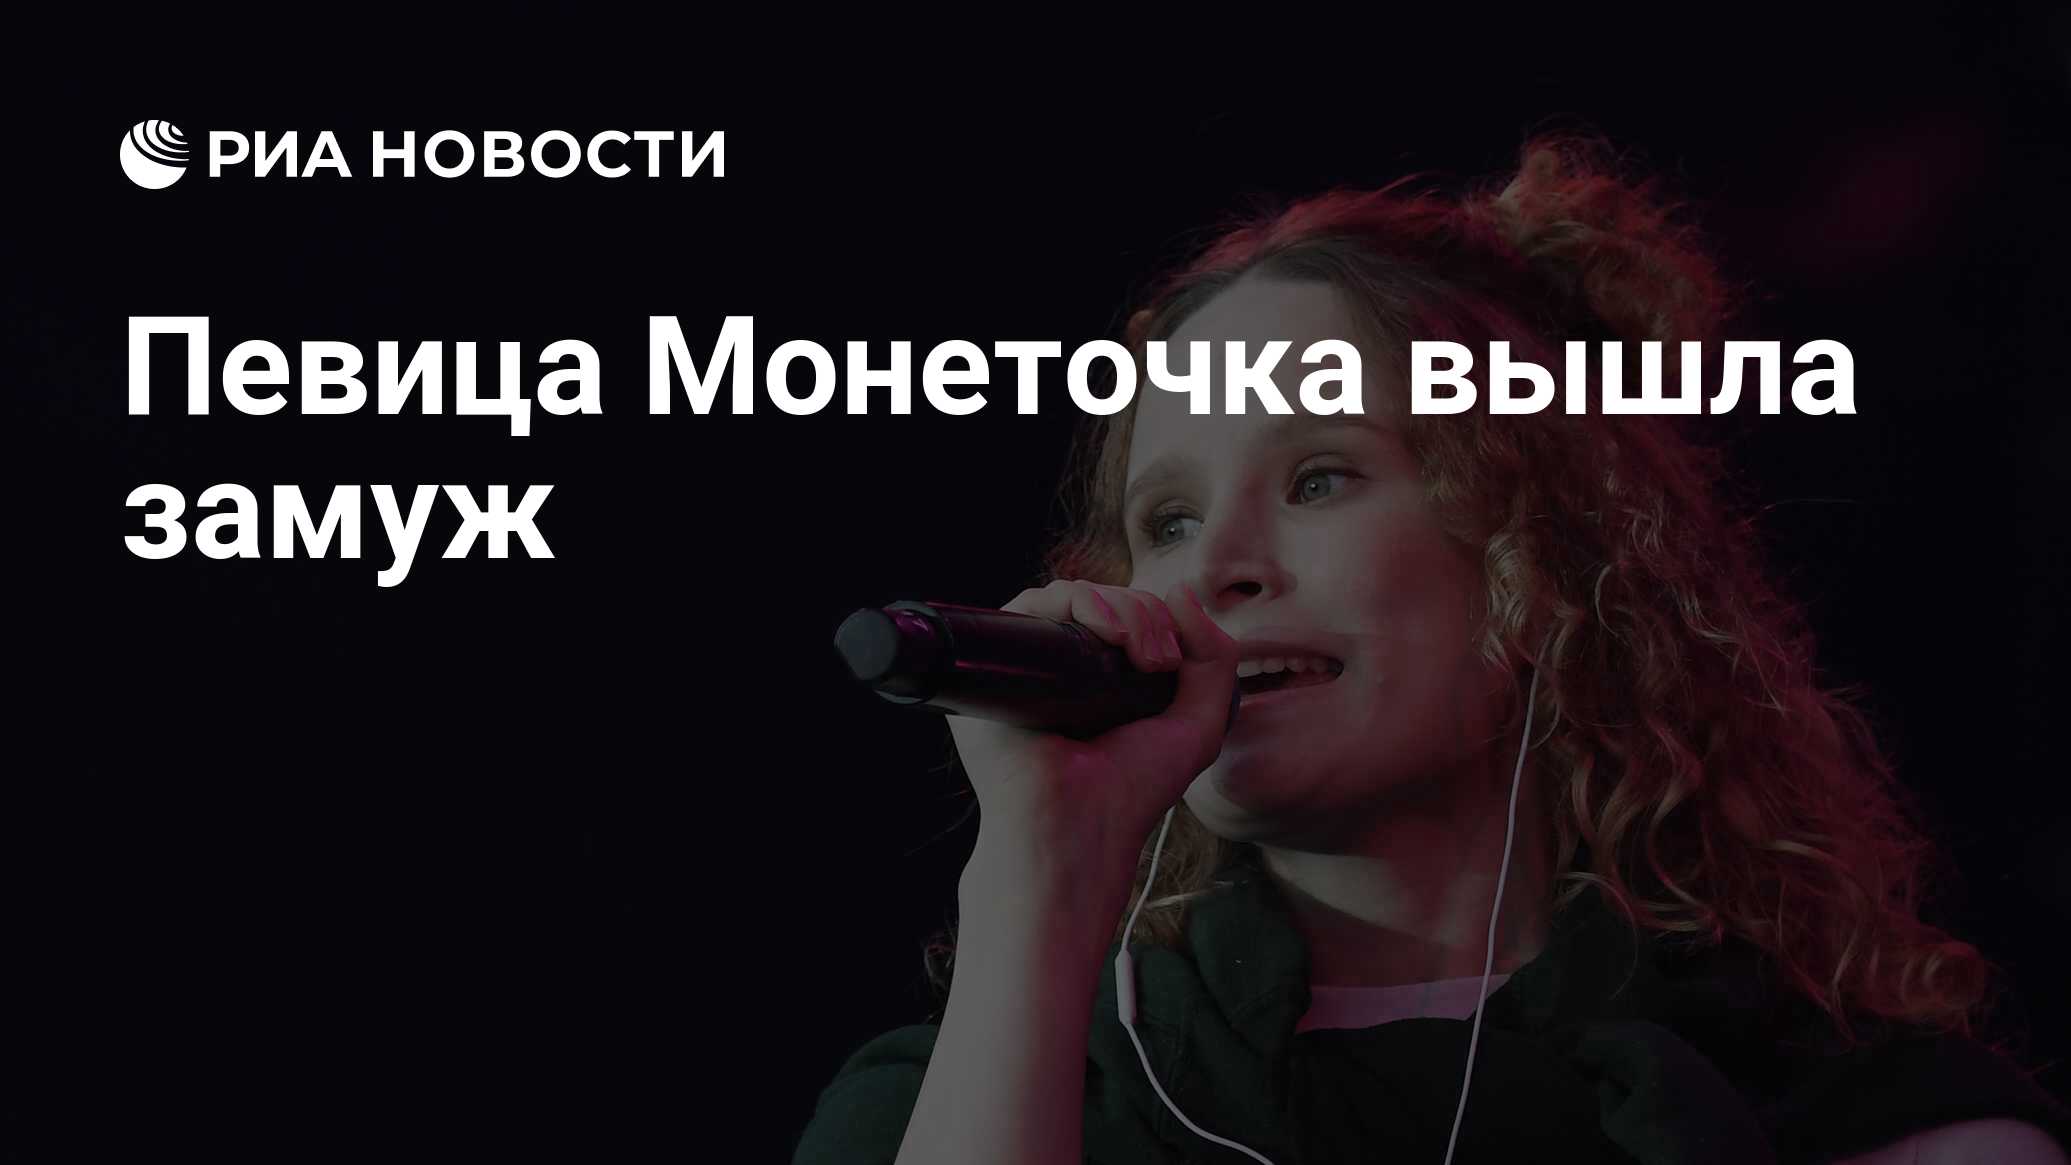 Певица Монеточка вышла замуж — РИА Новости, 26.12.2020